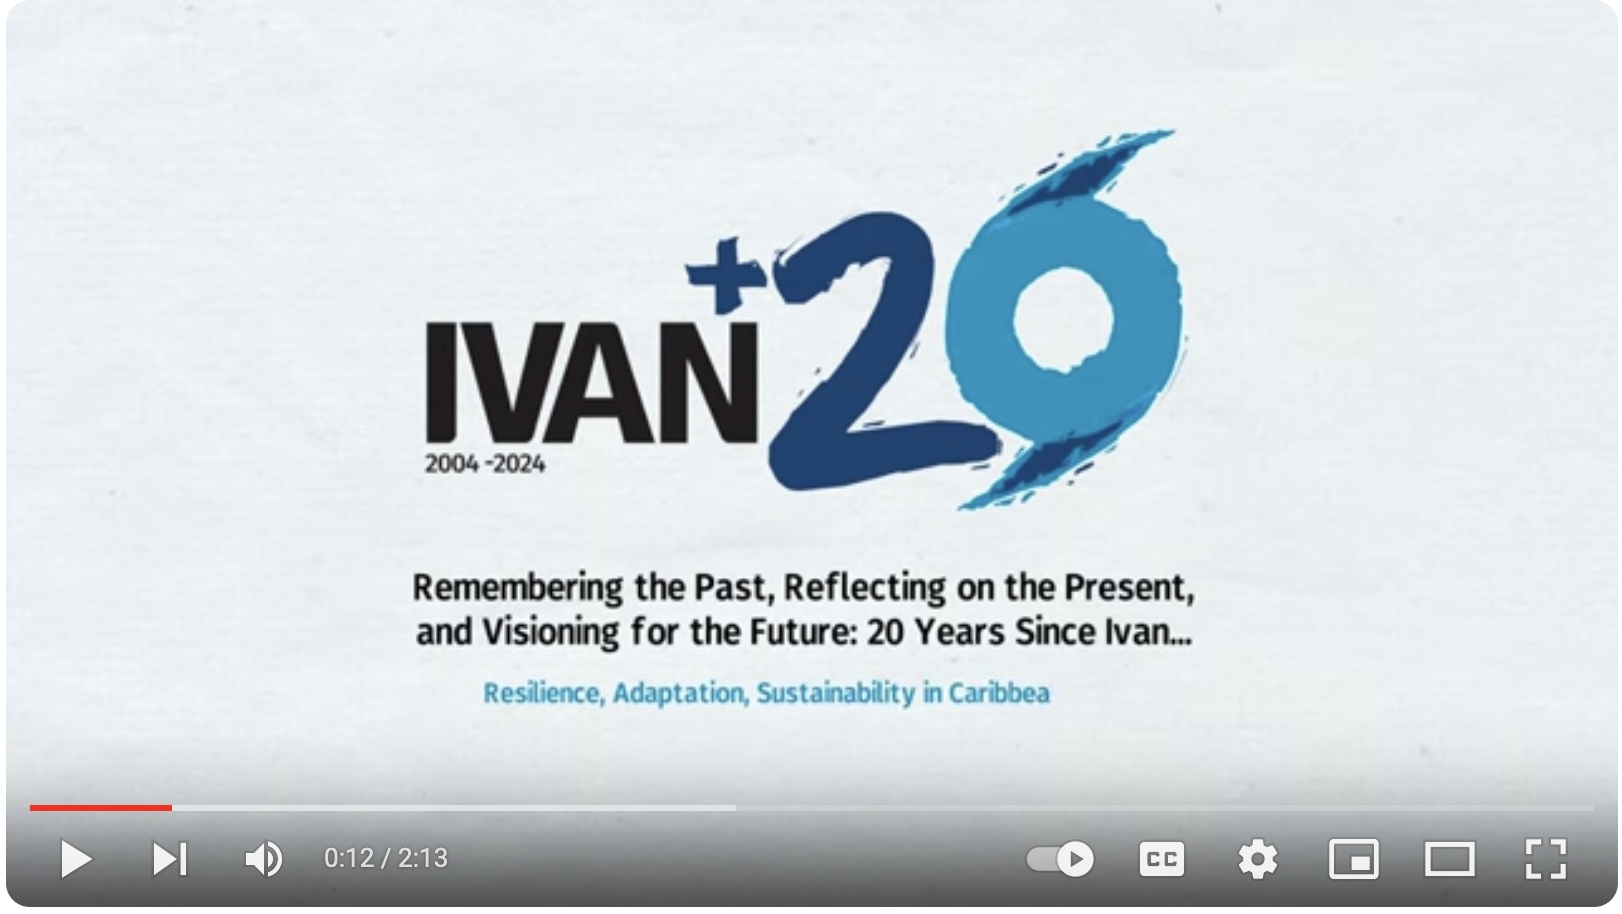 Ivan+20 Introduction Video